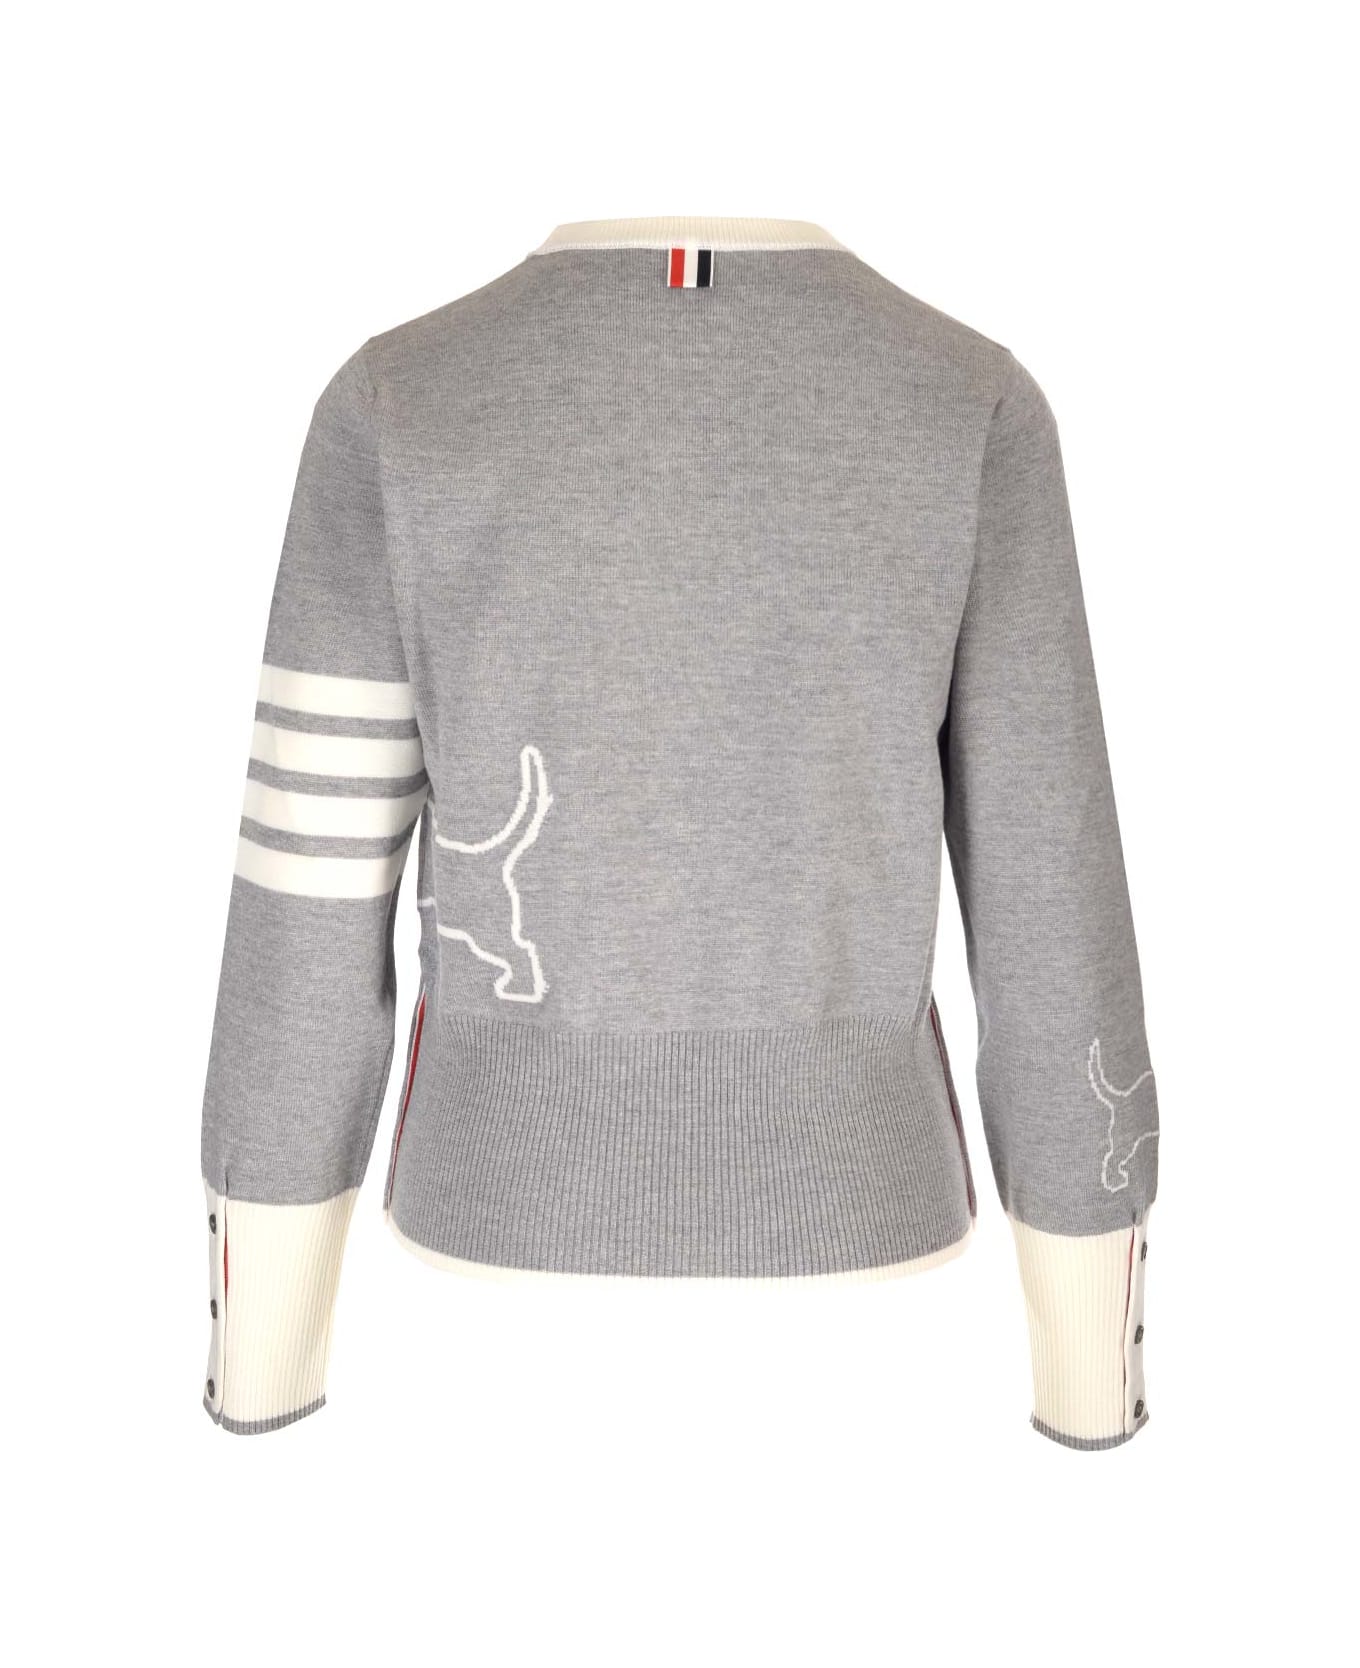 Thom Browne Merino Wool Crew-neck Sweater - Gray ニットウェア